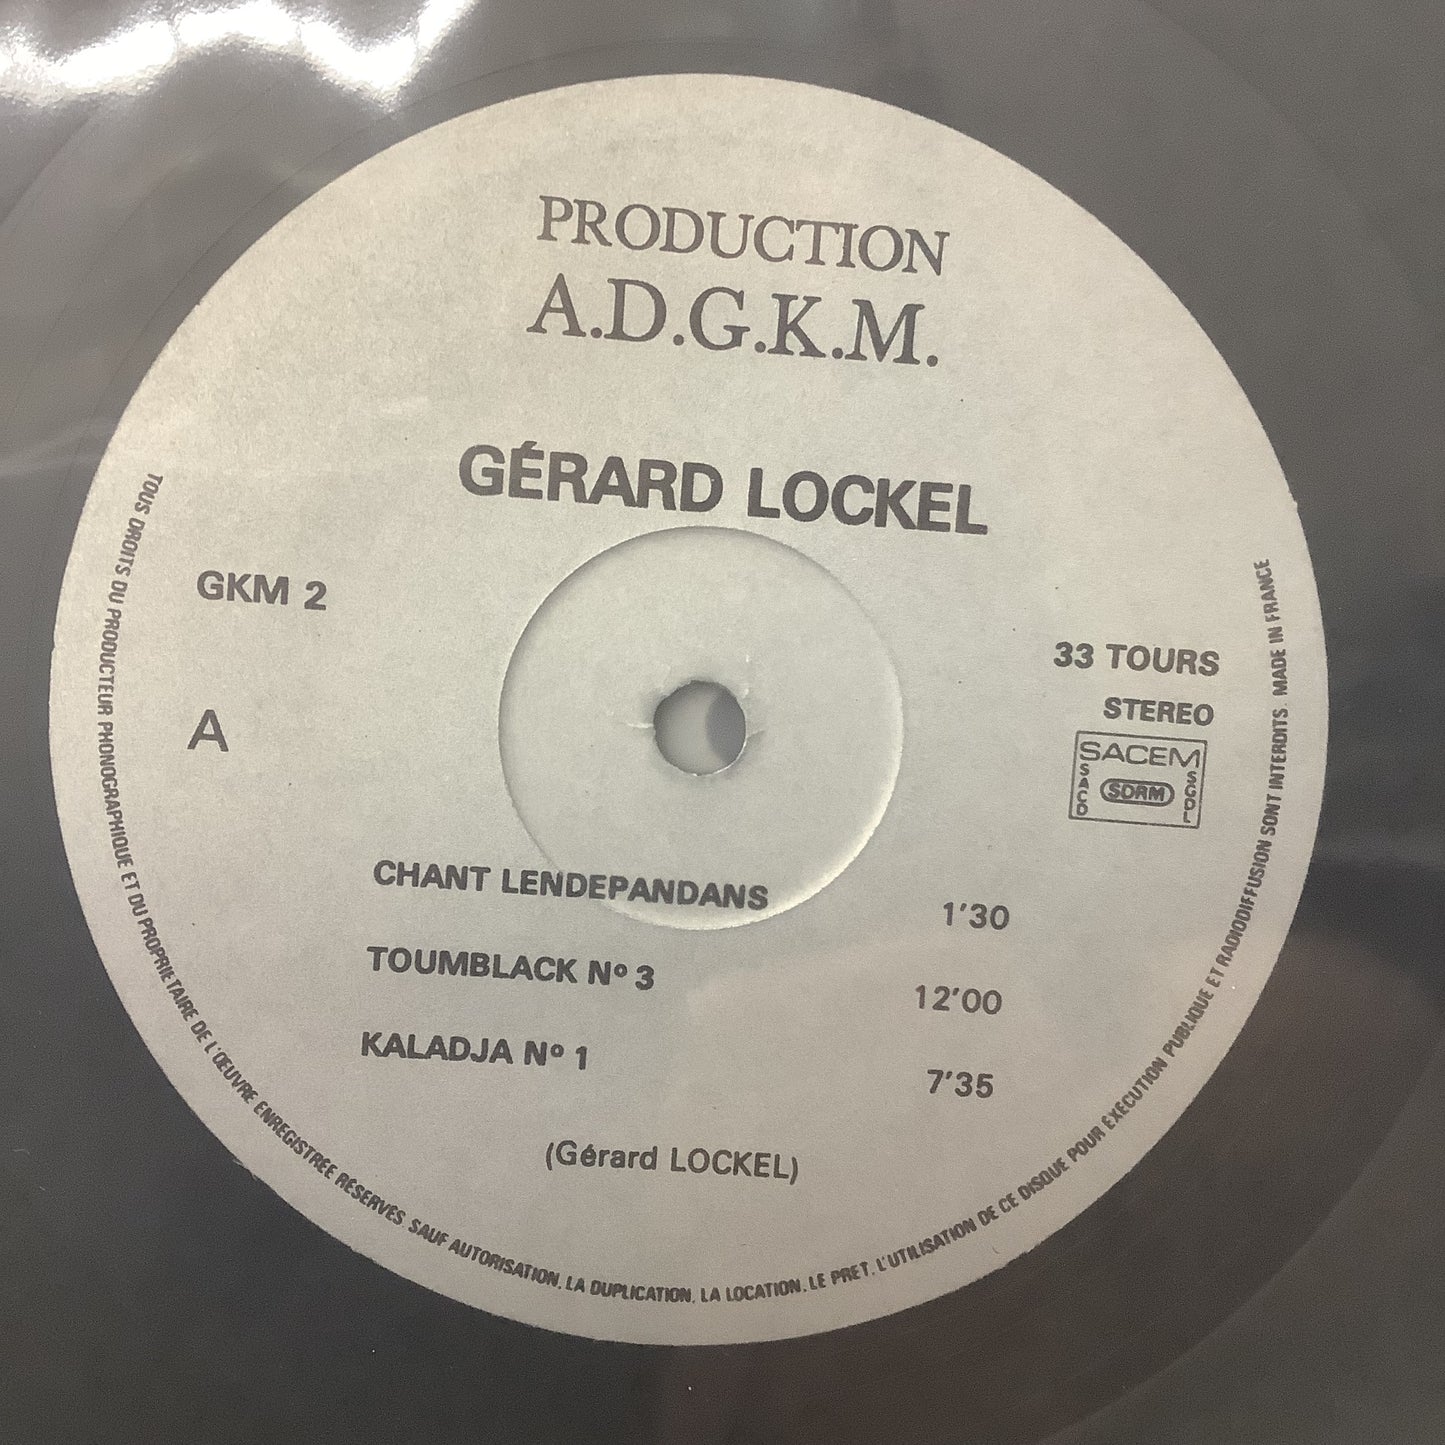 Gérard Lockel - Gwo Ka Modènn - LP